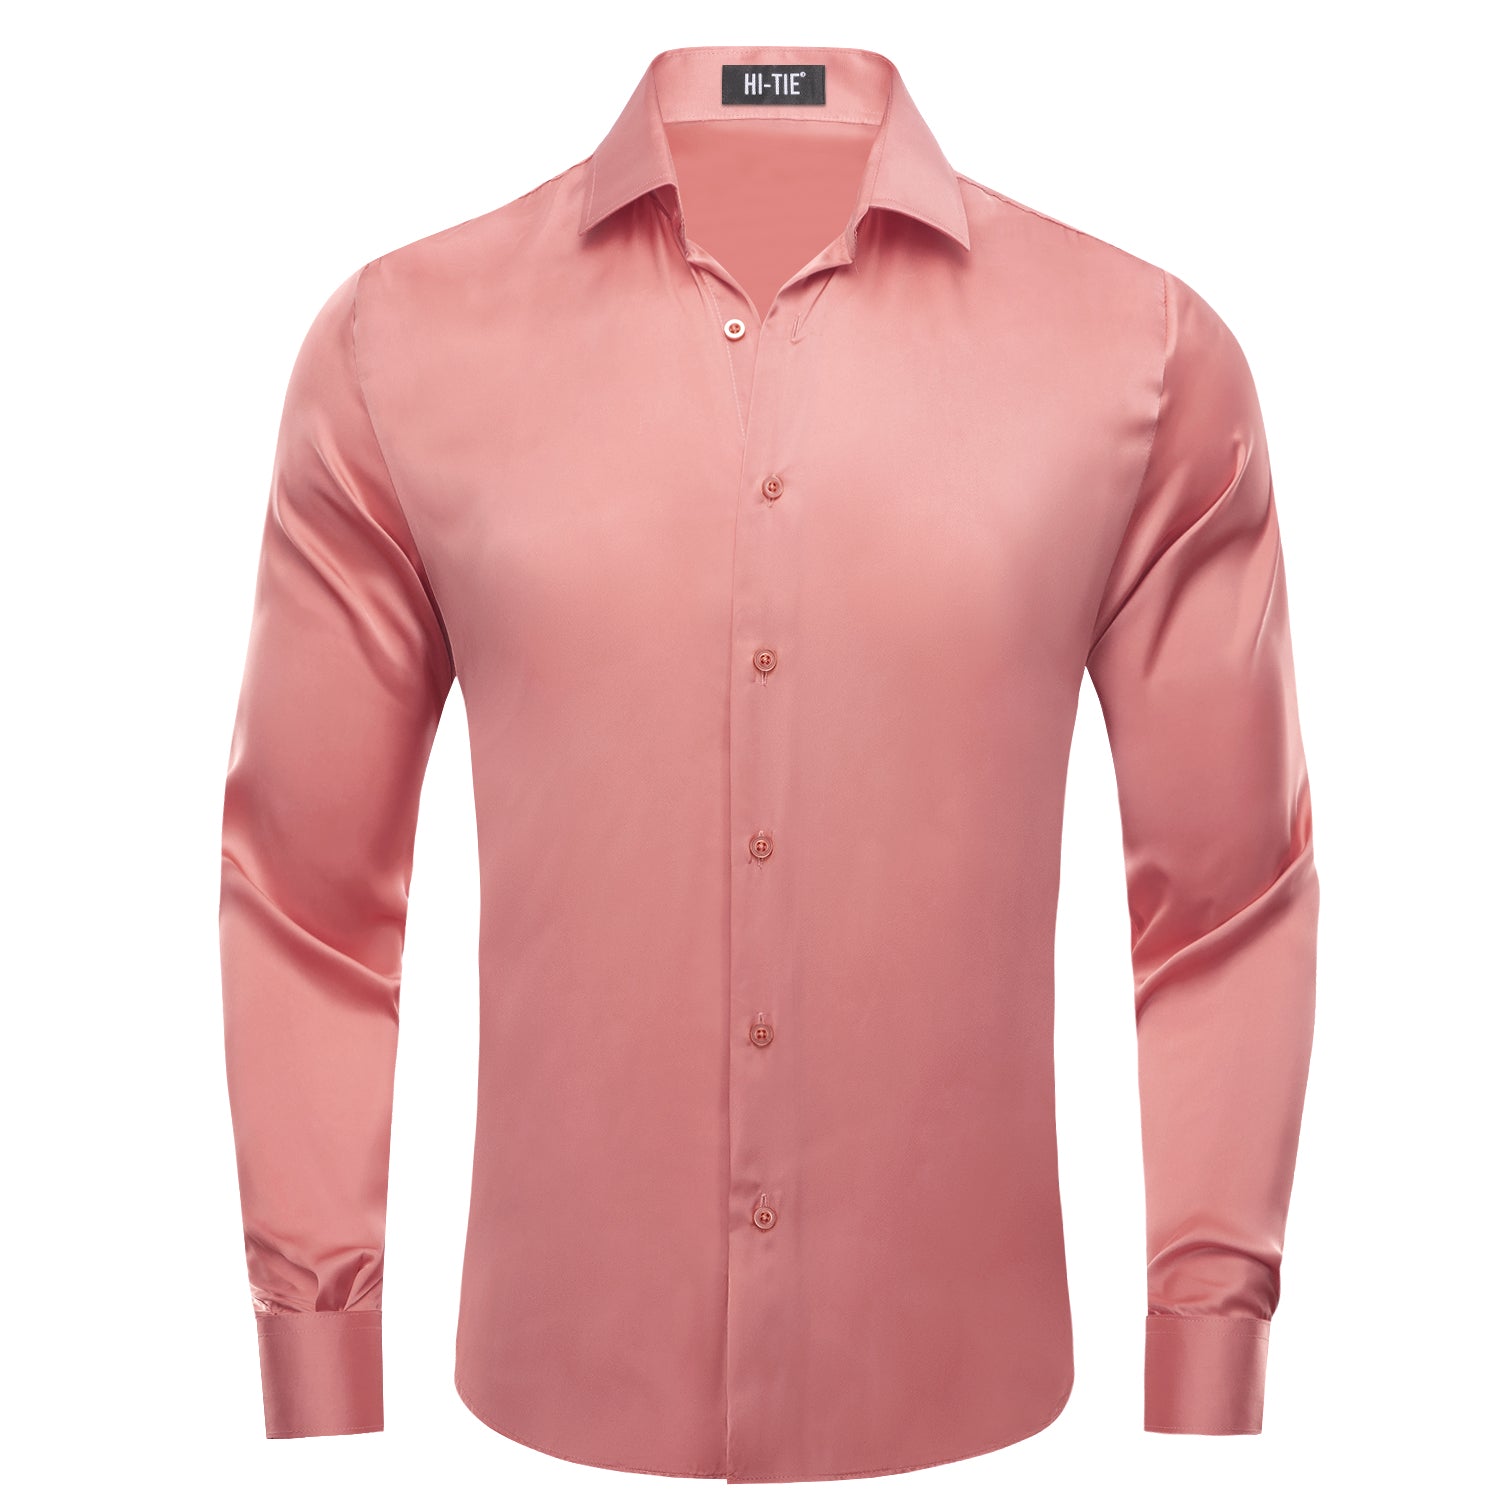 Hi-Tie Orange Floral Short Sleeves Mens Shirts Jacquard Silk